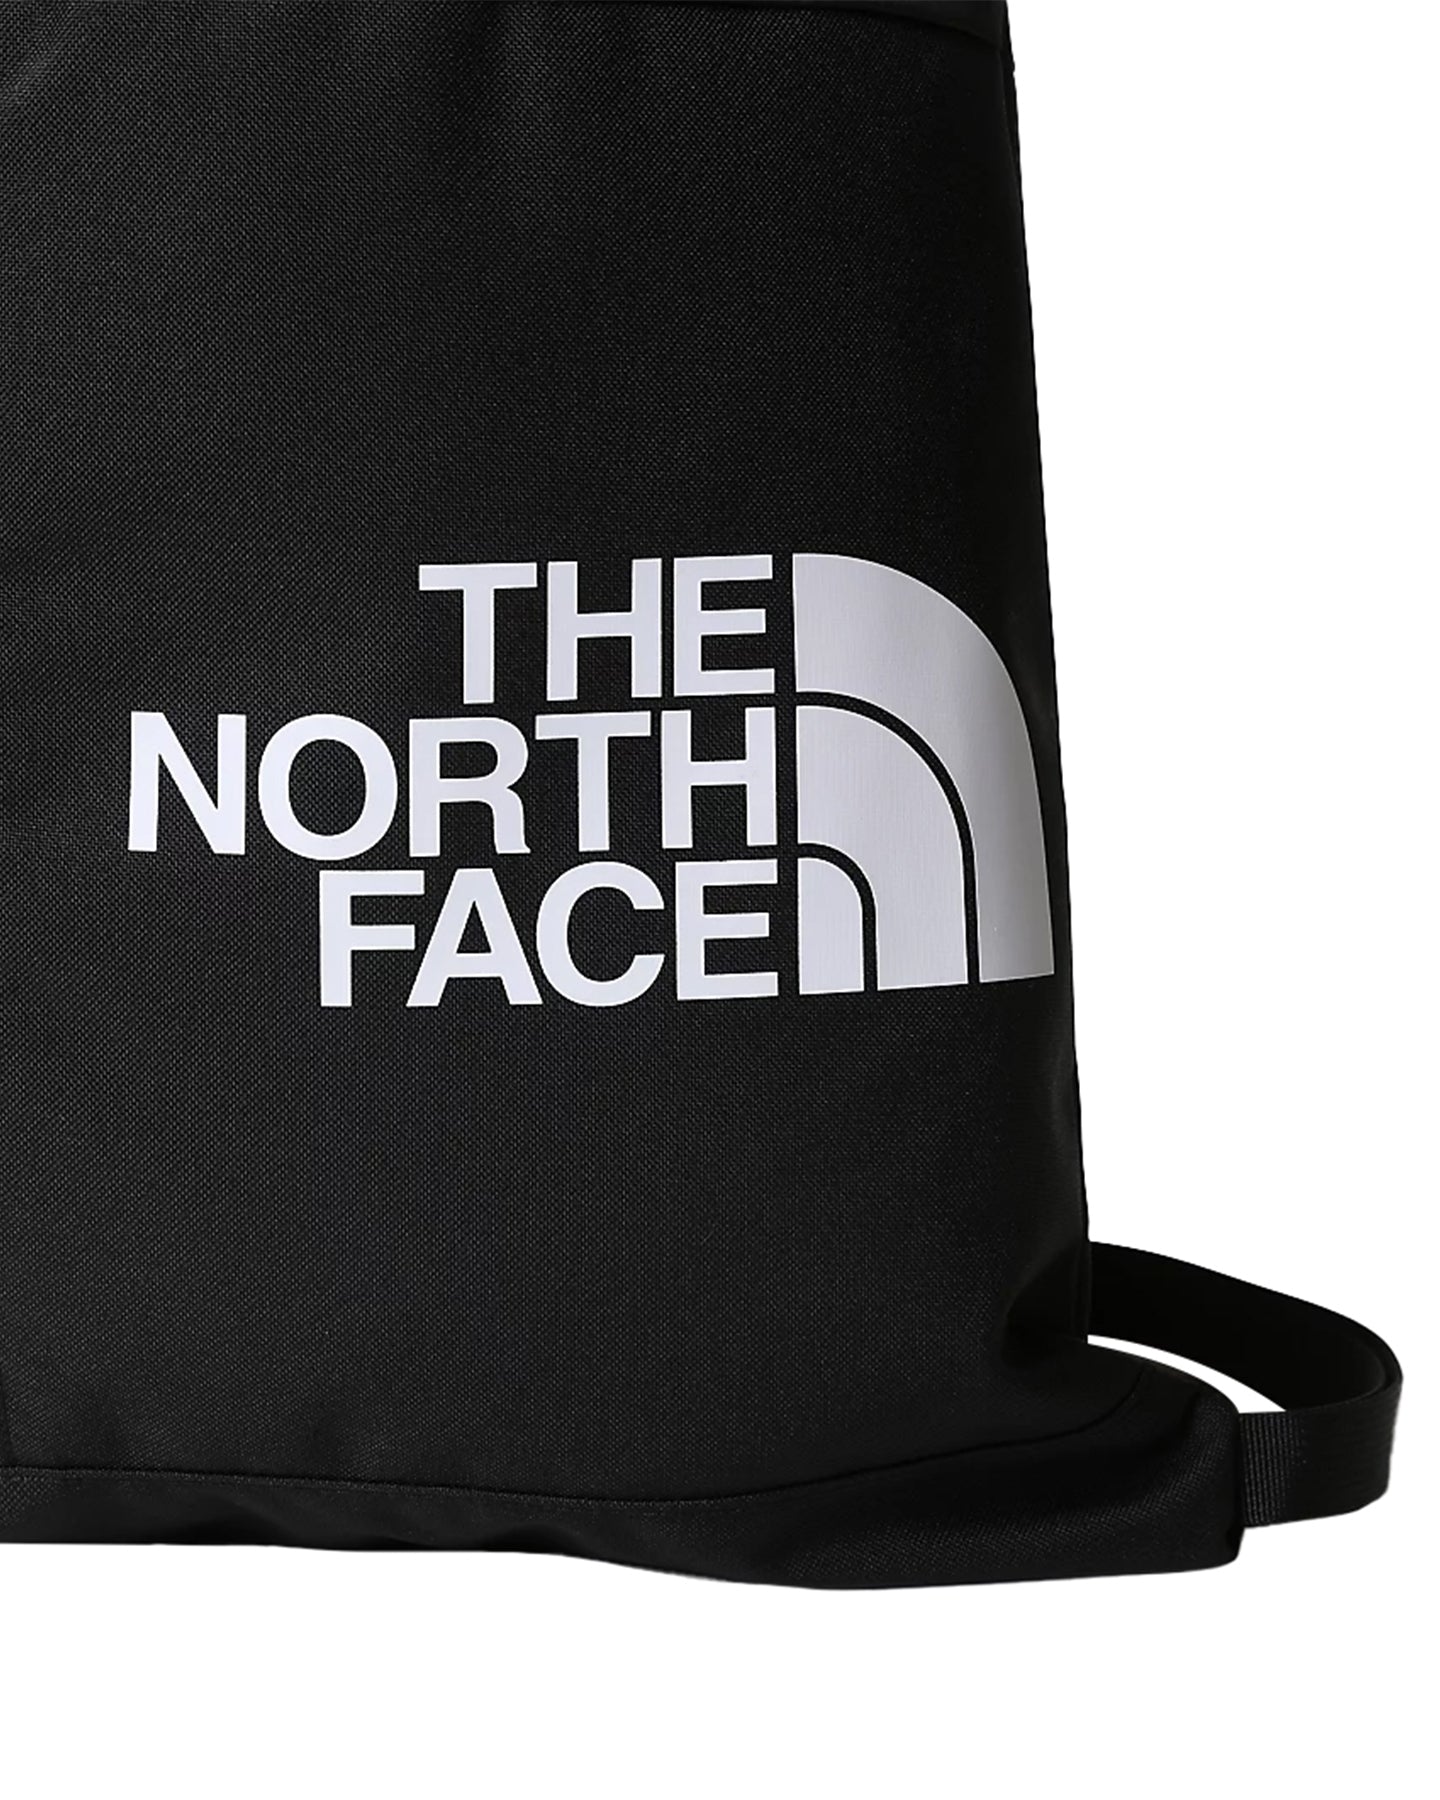 The North Face Bozer Cinch Pack - TNF Black / TNF White Backpacks - Trojan Wake Ski Snow